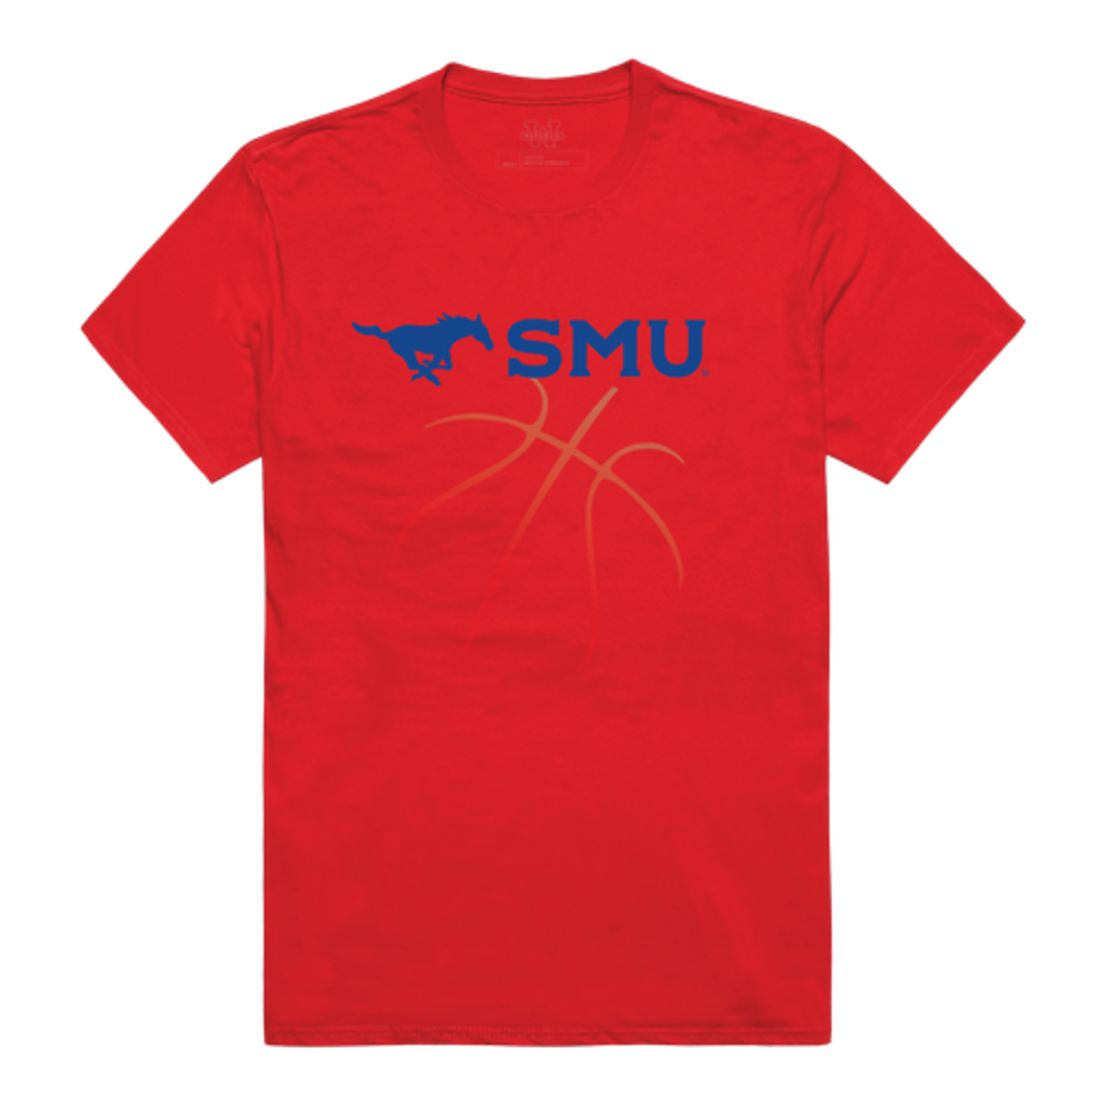 Southern Methodist University Mustangs Basketball T-Shirt